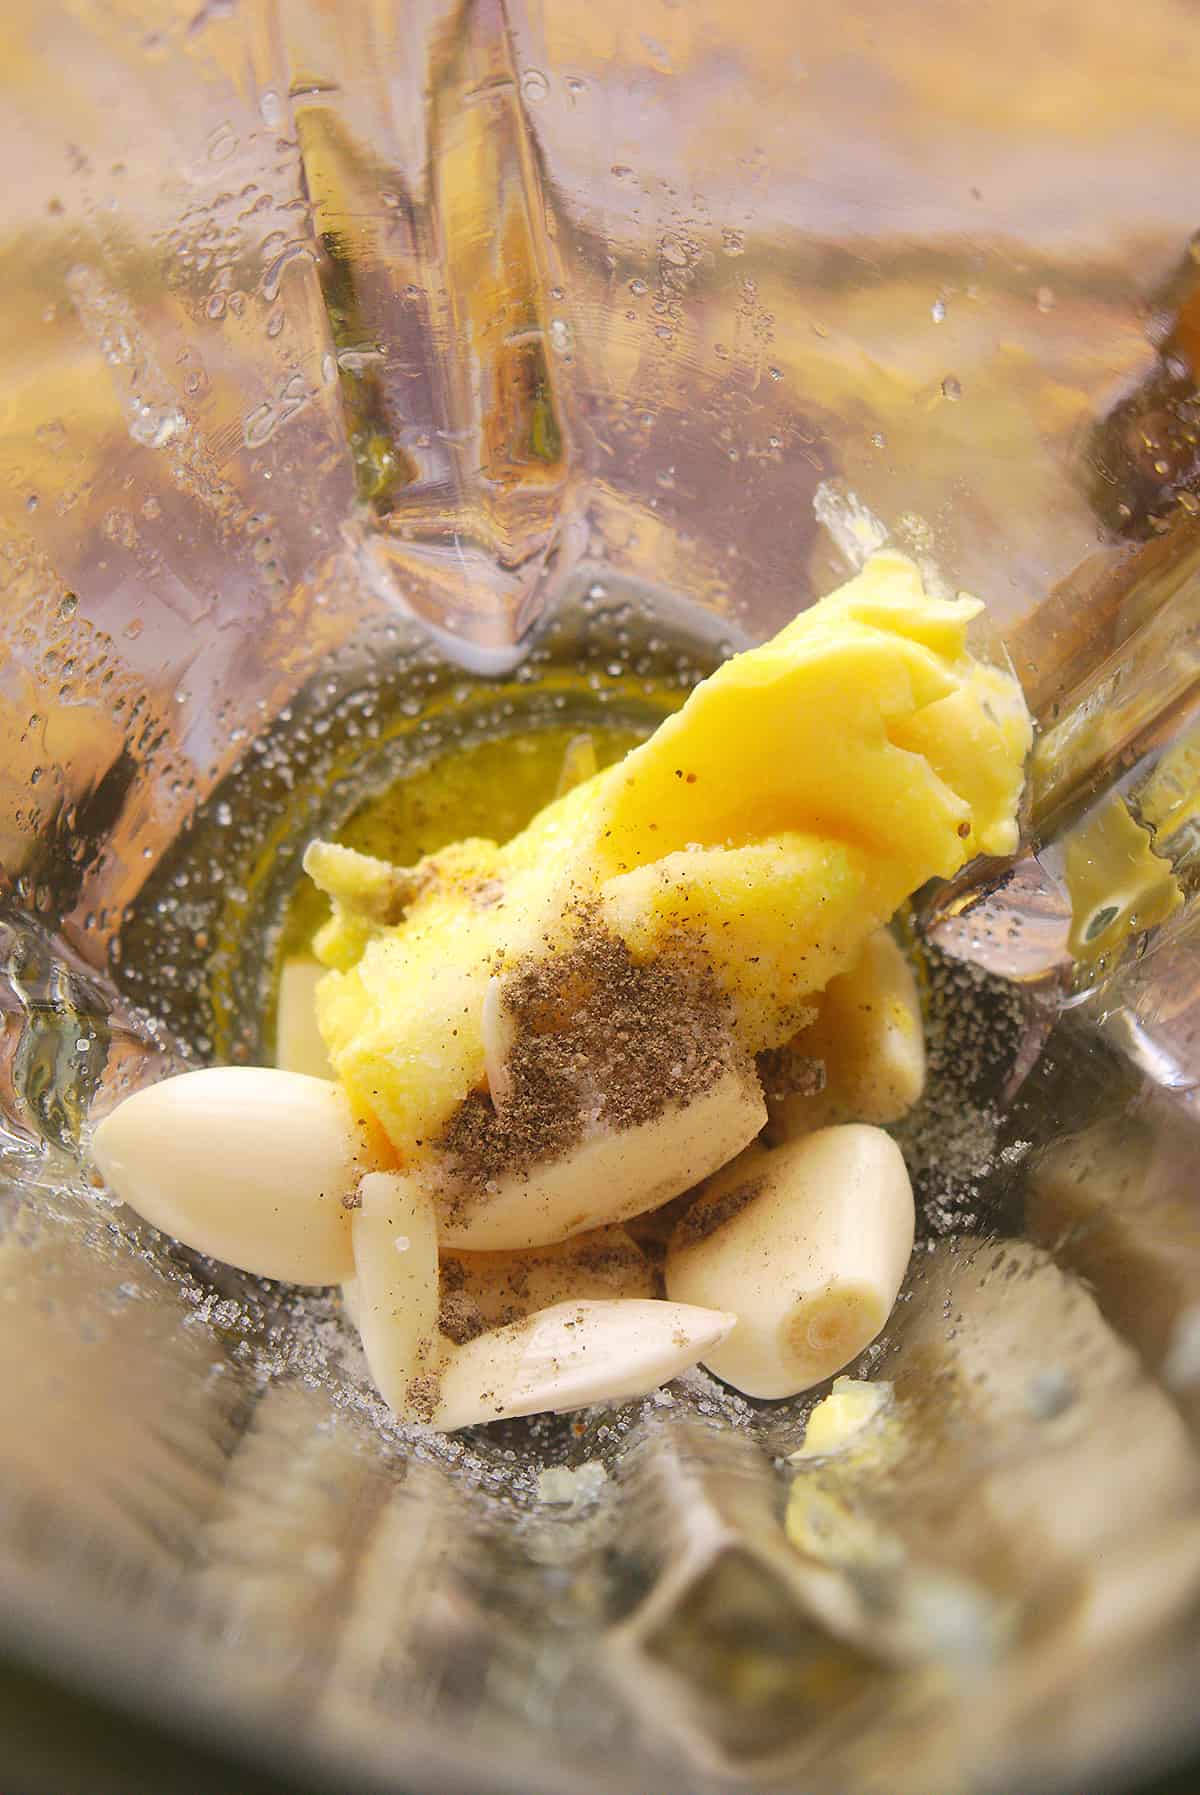 Garlic, pepper and butter in a glass blender